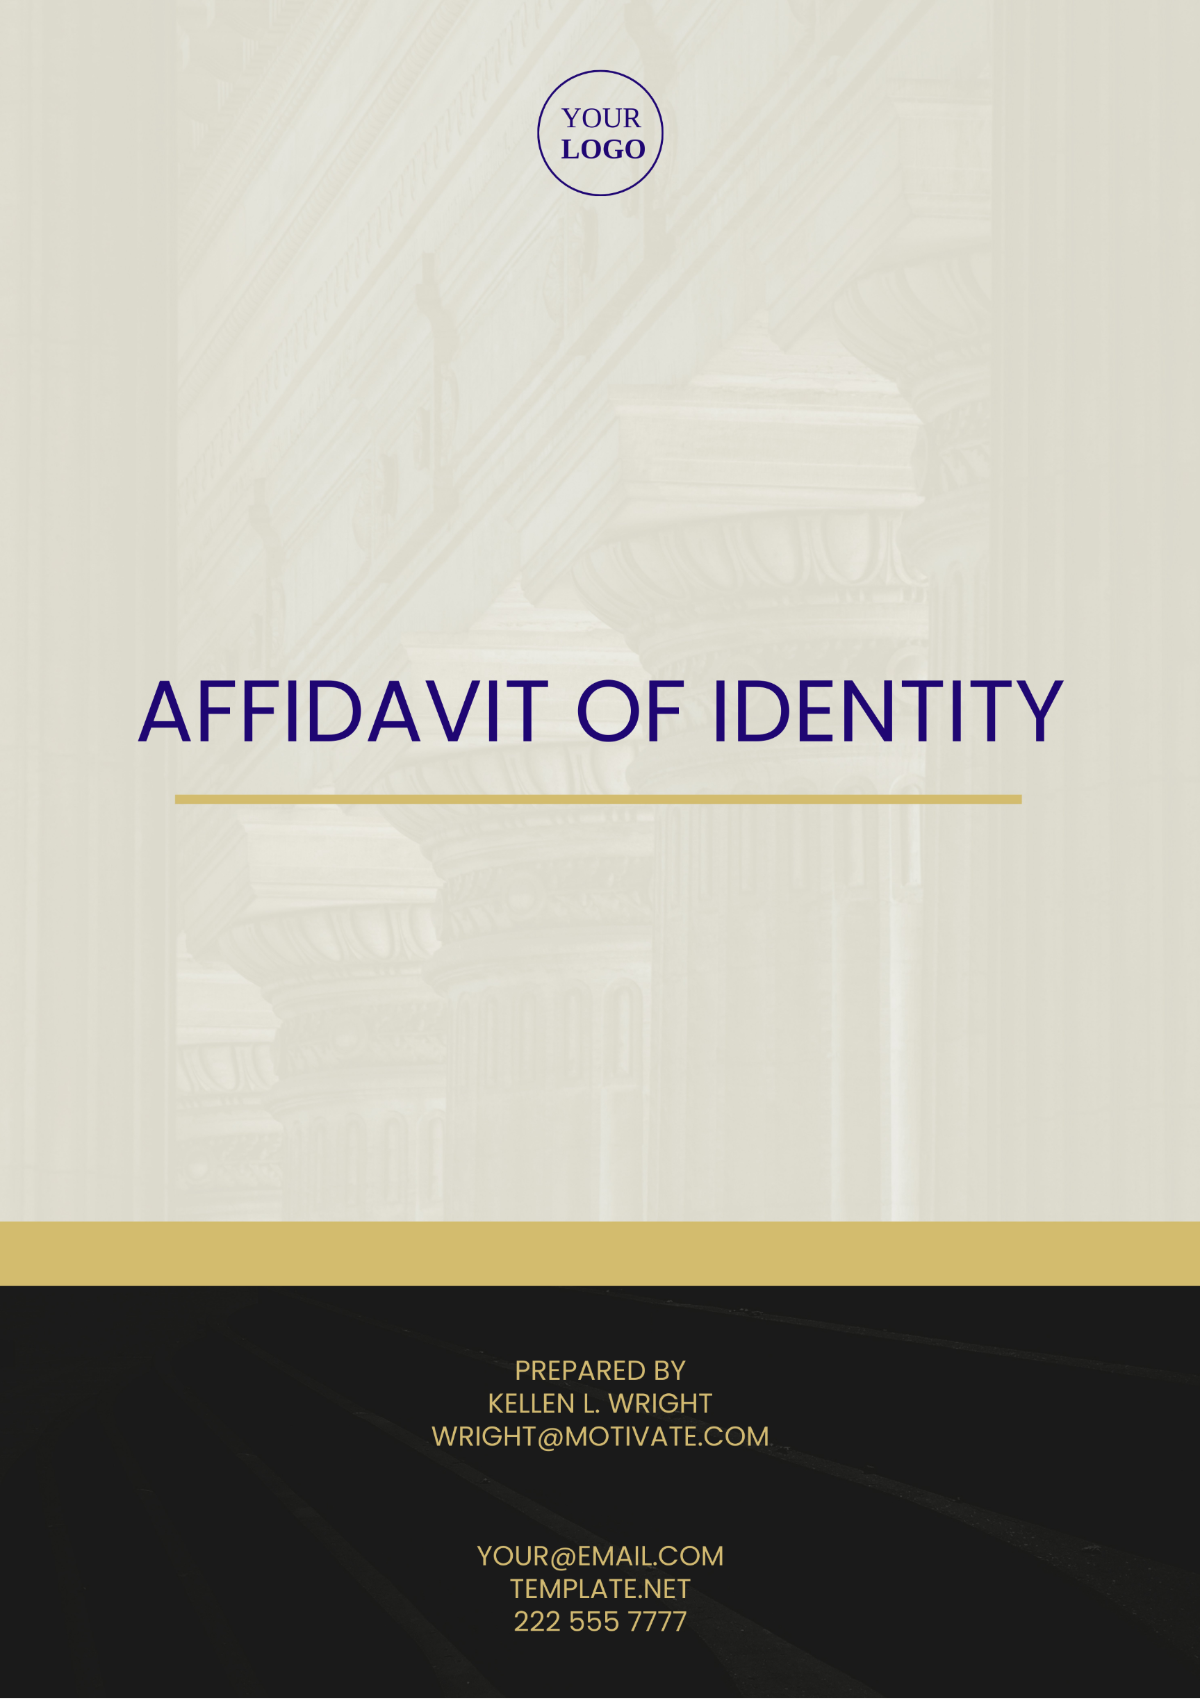 Kentucky Affidavit of Identity Template